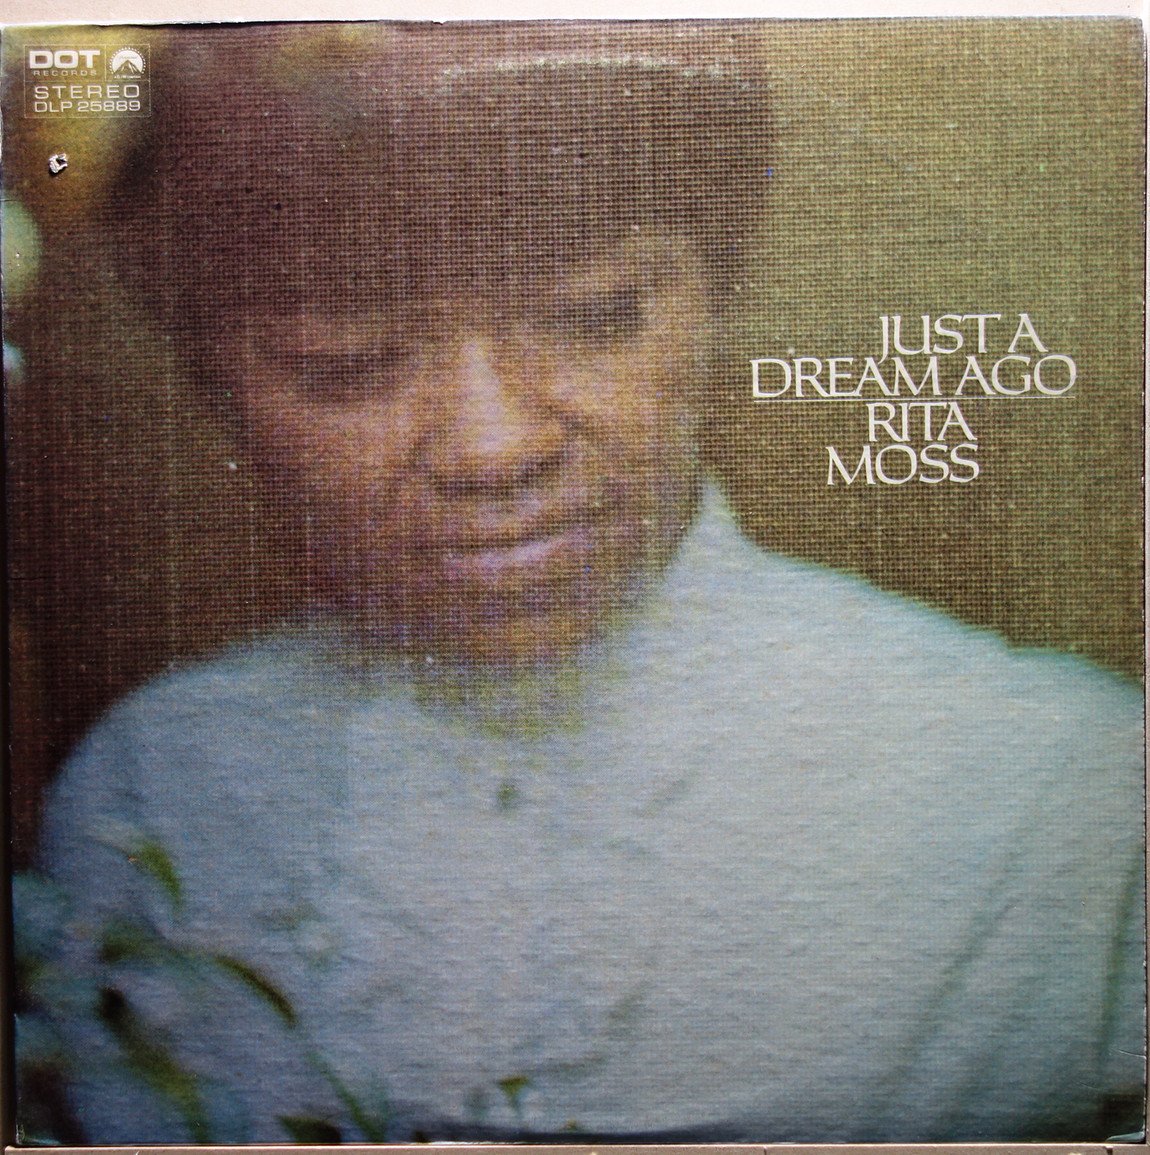 Rita Moss   Just A Dream Ago   Vinylian   Vintage Vinyl Record Shop